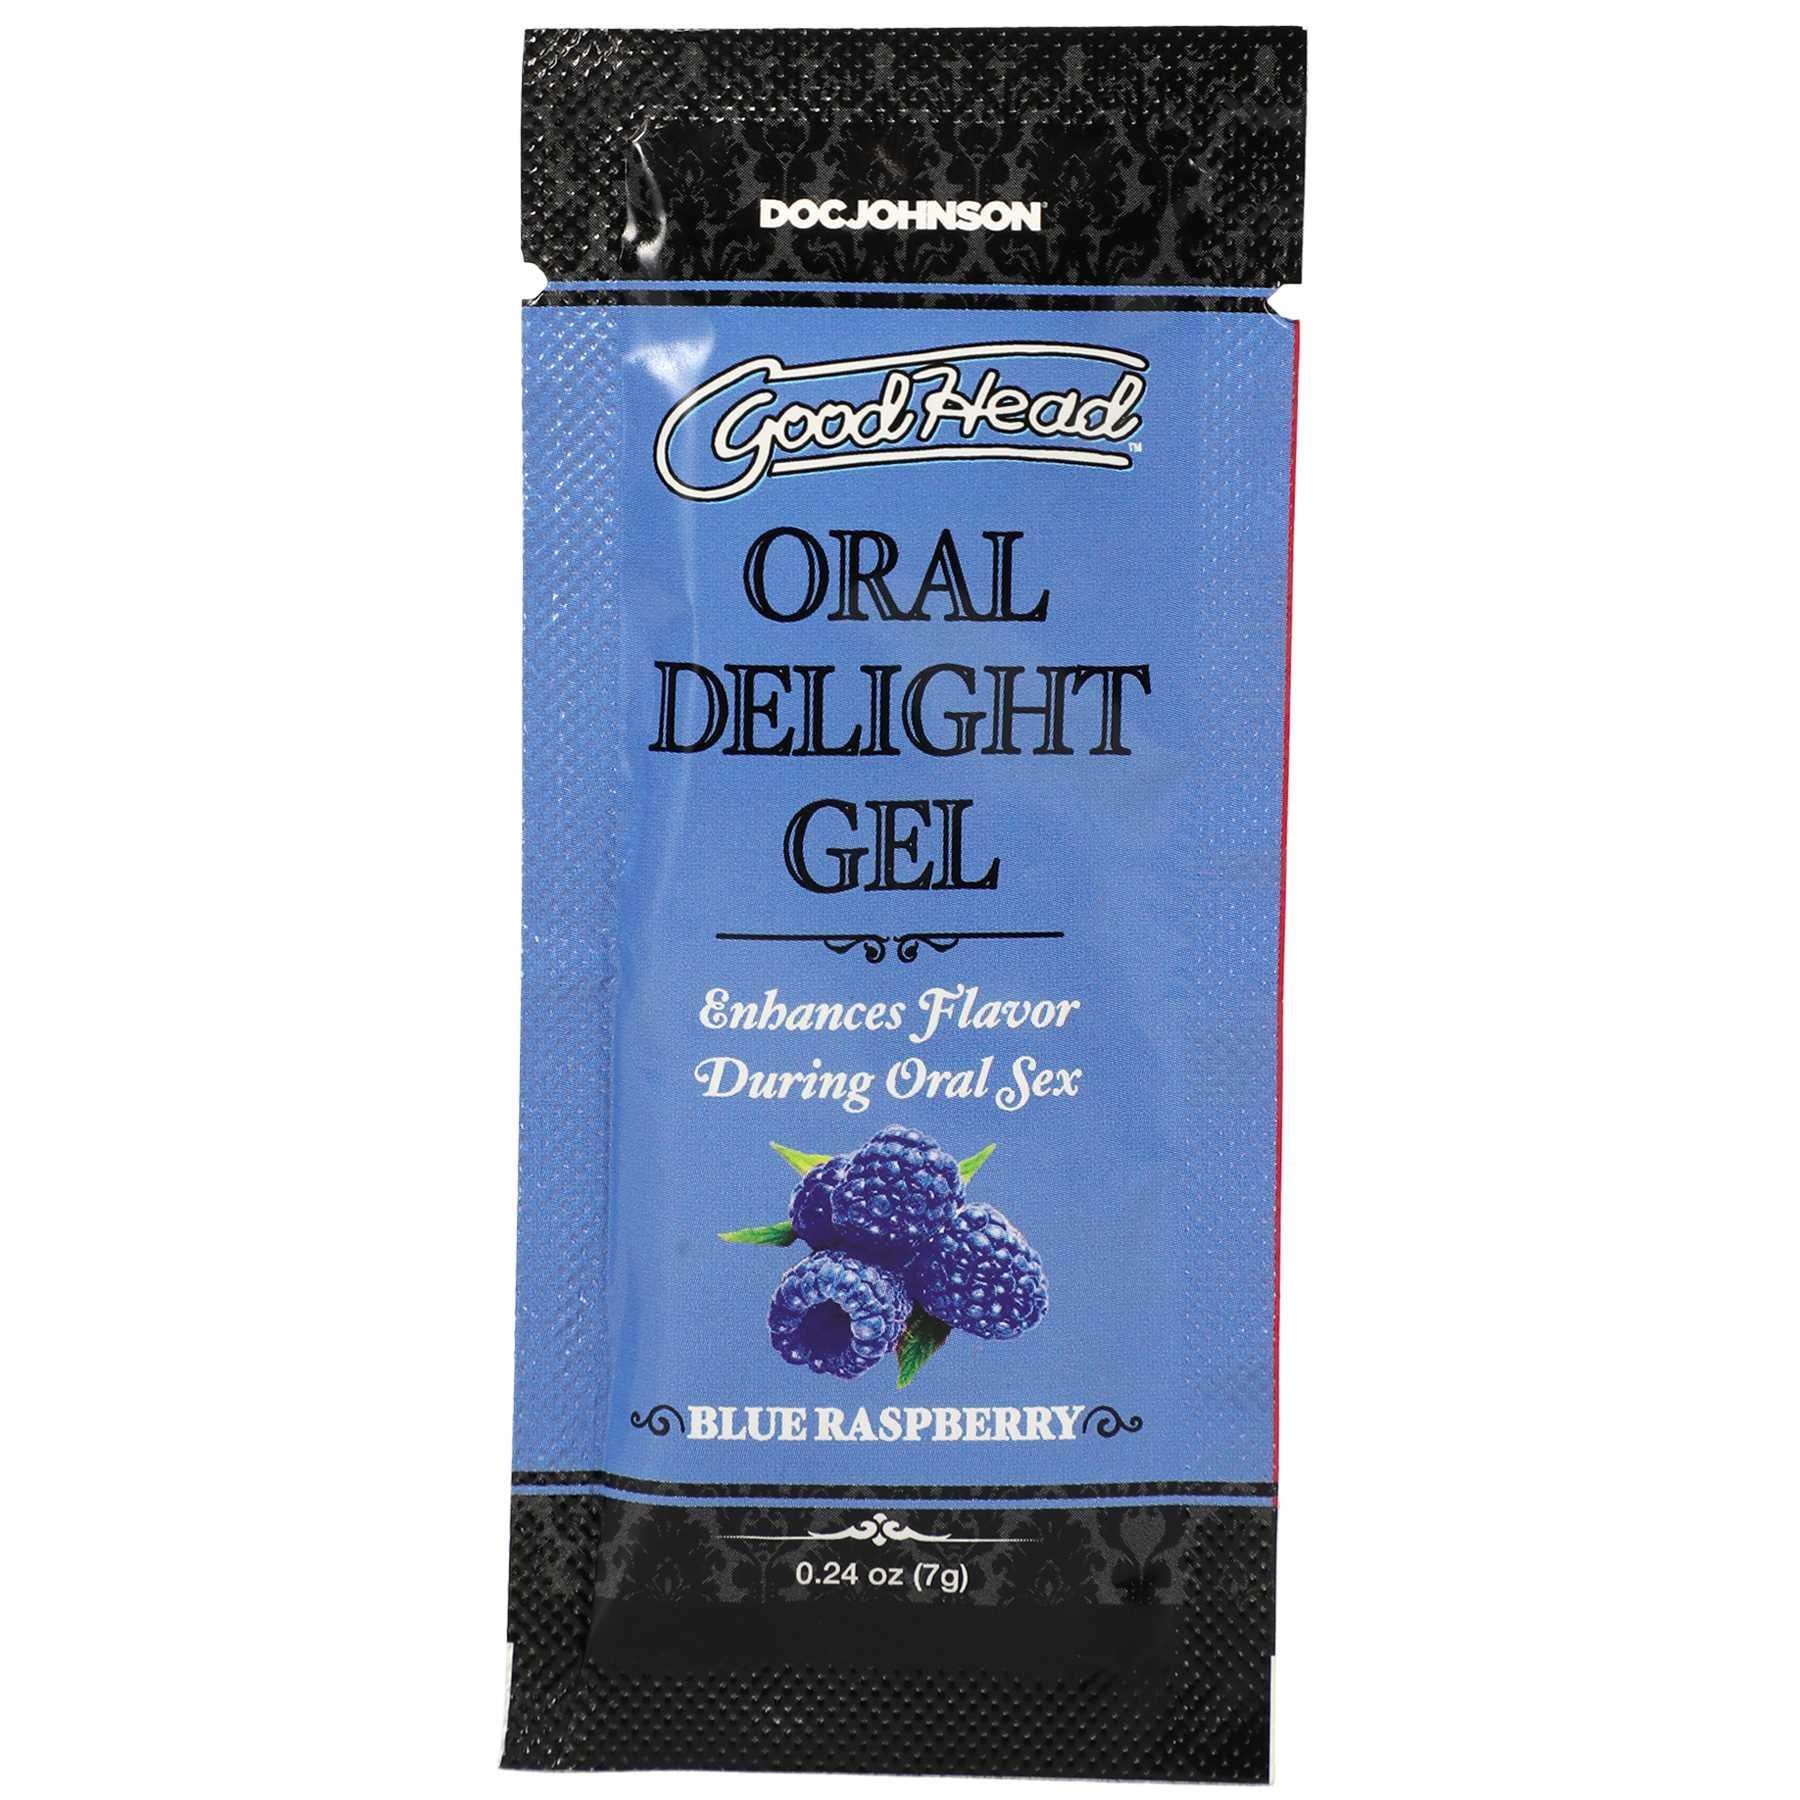 GoodHead - Oral Delight Gel -  blue raspberry -0.24 oz front